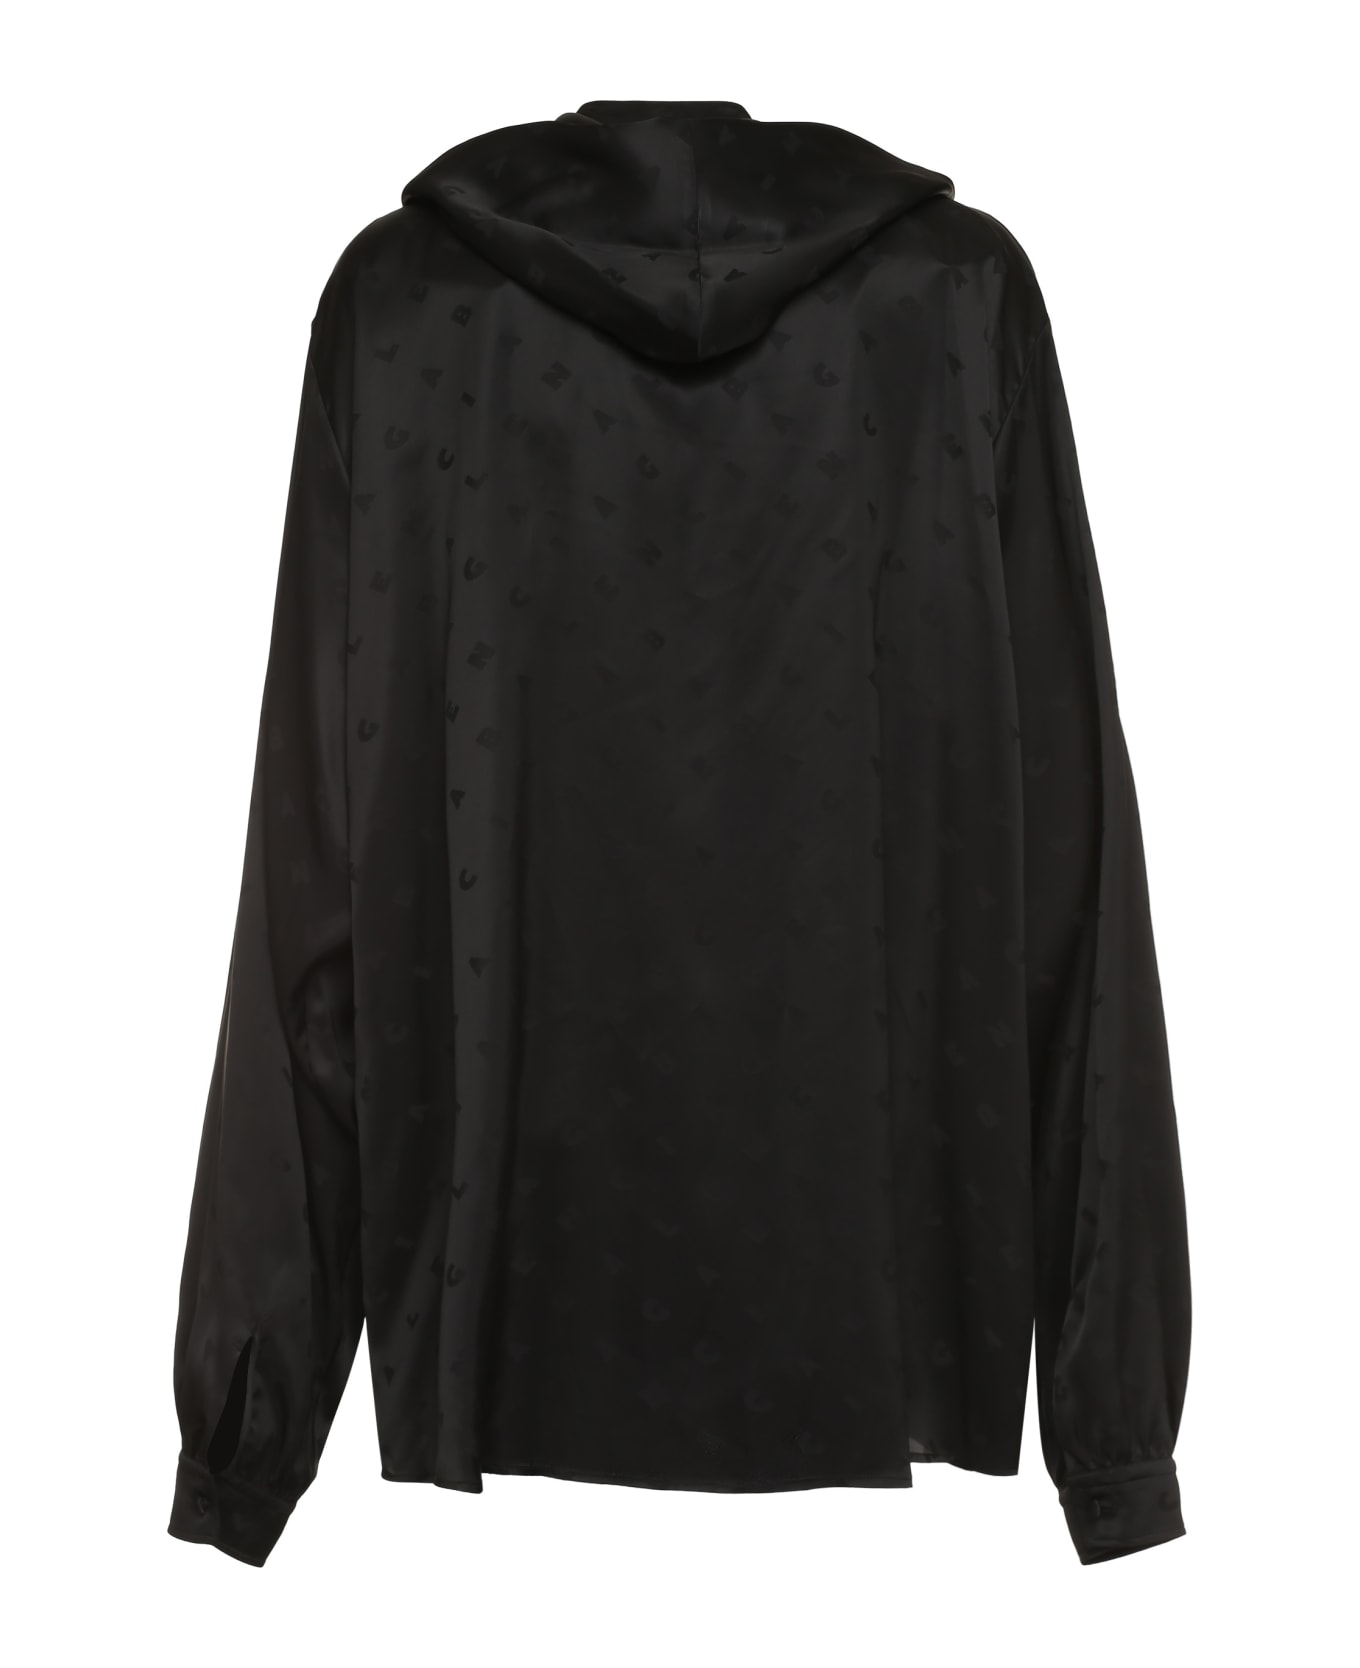 Balenciaga Jacquard Shirt - black